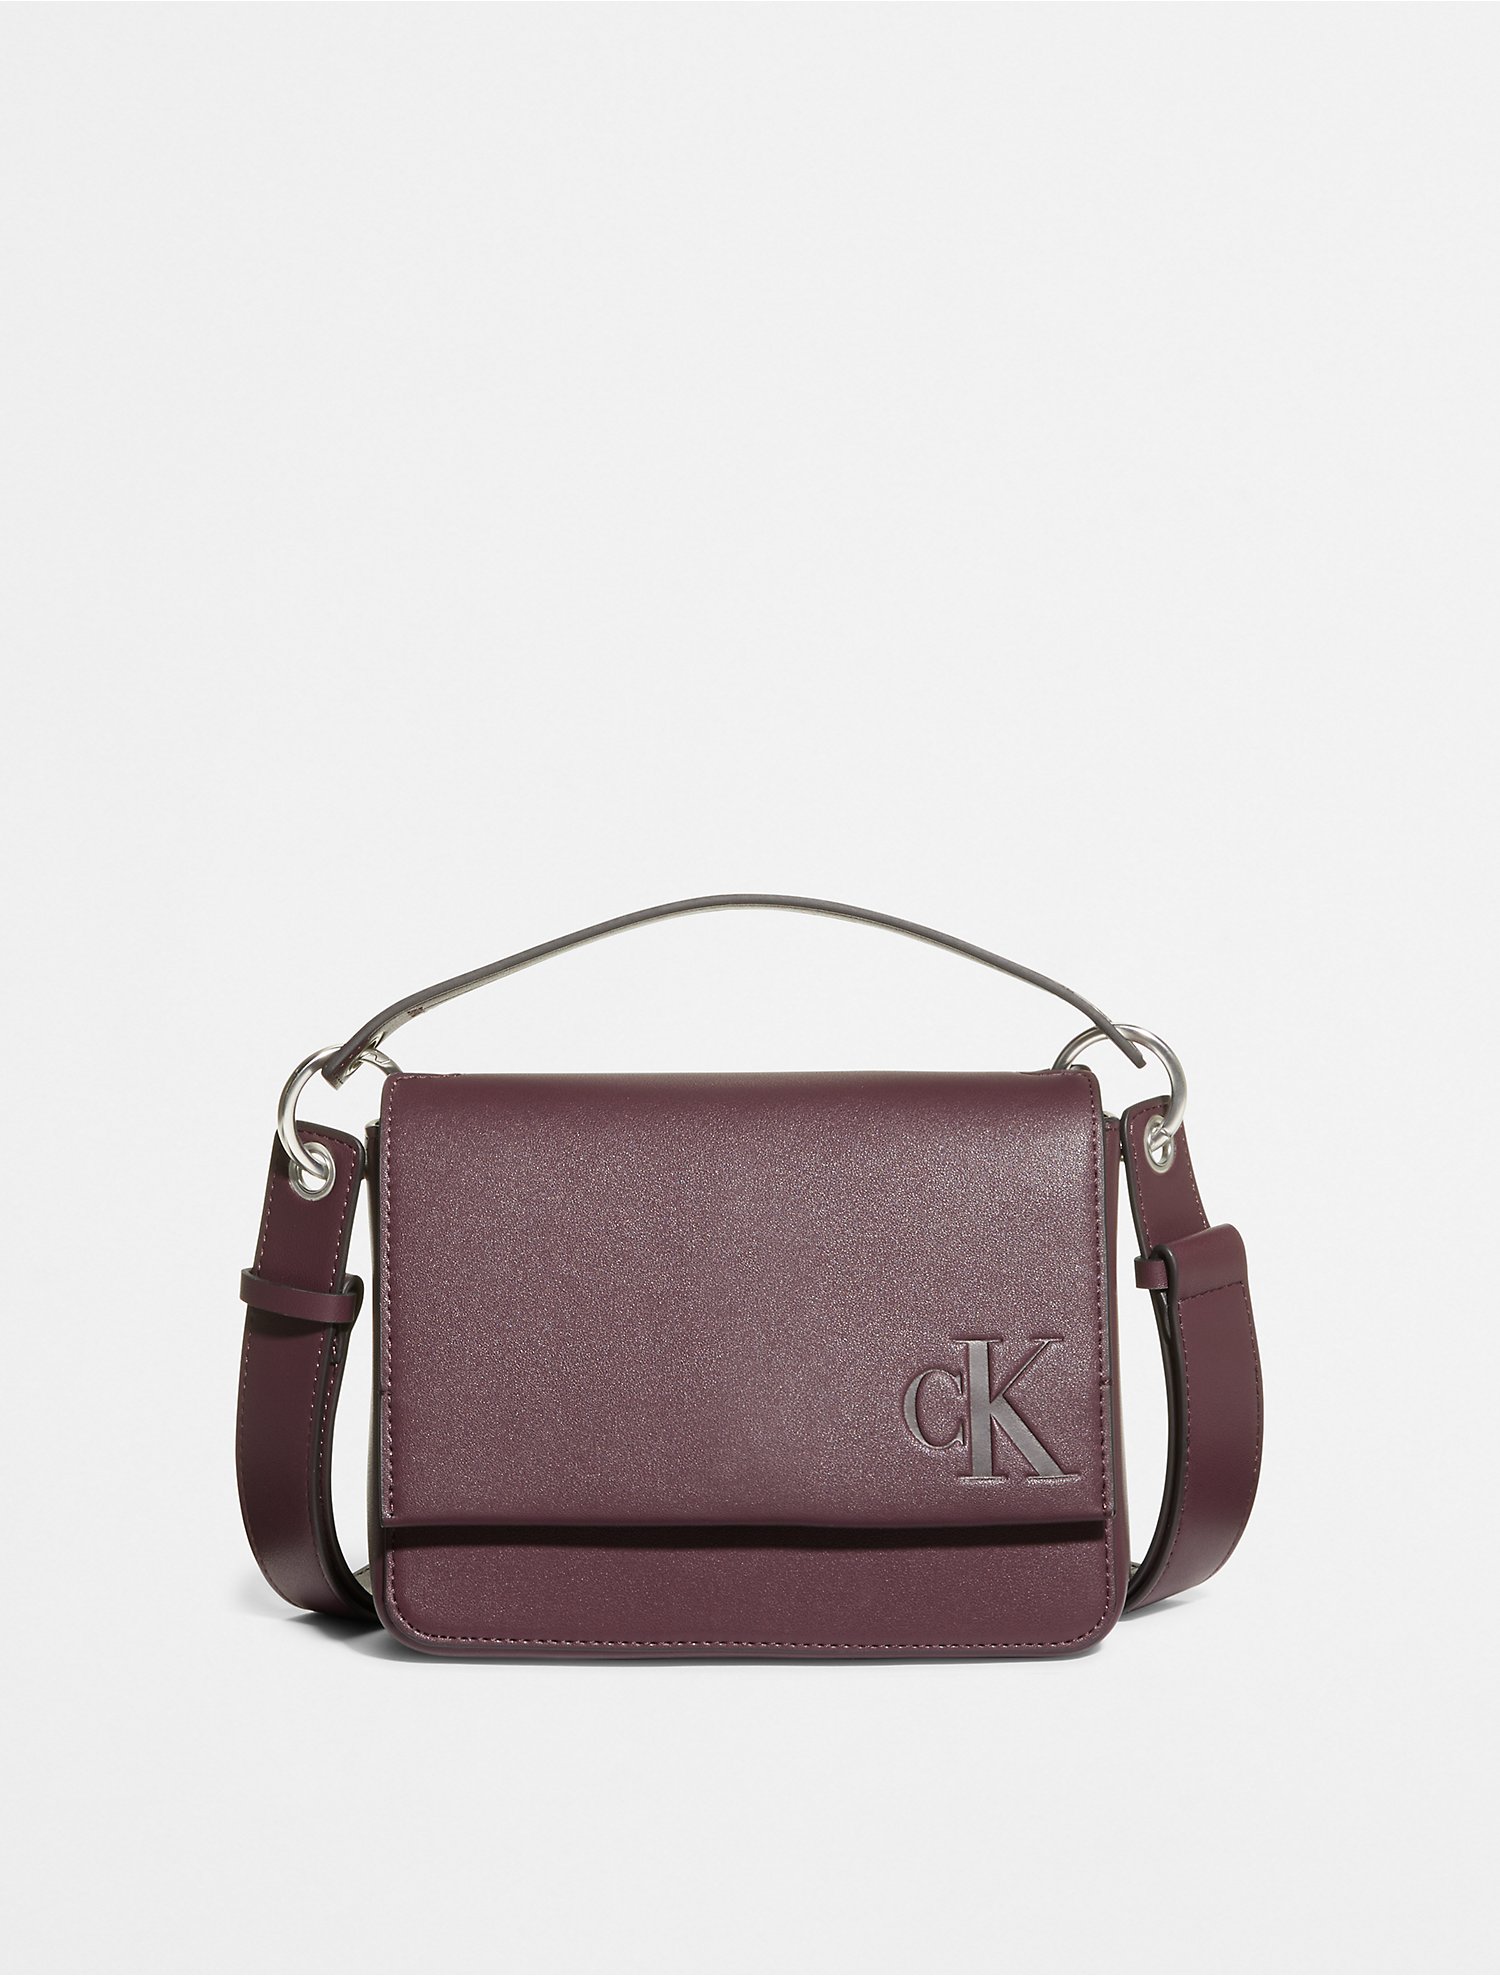 Top 62+ imagen burgundy calvin klein purse